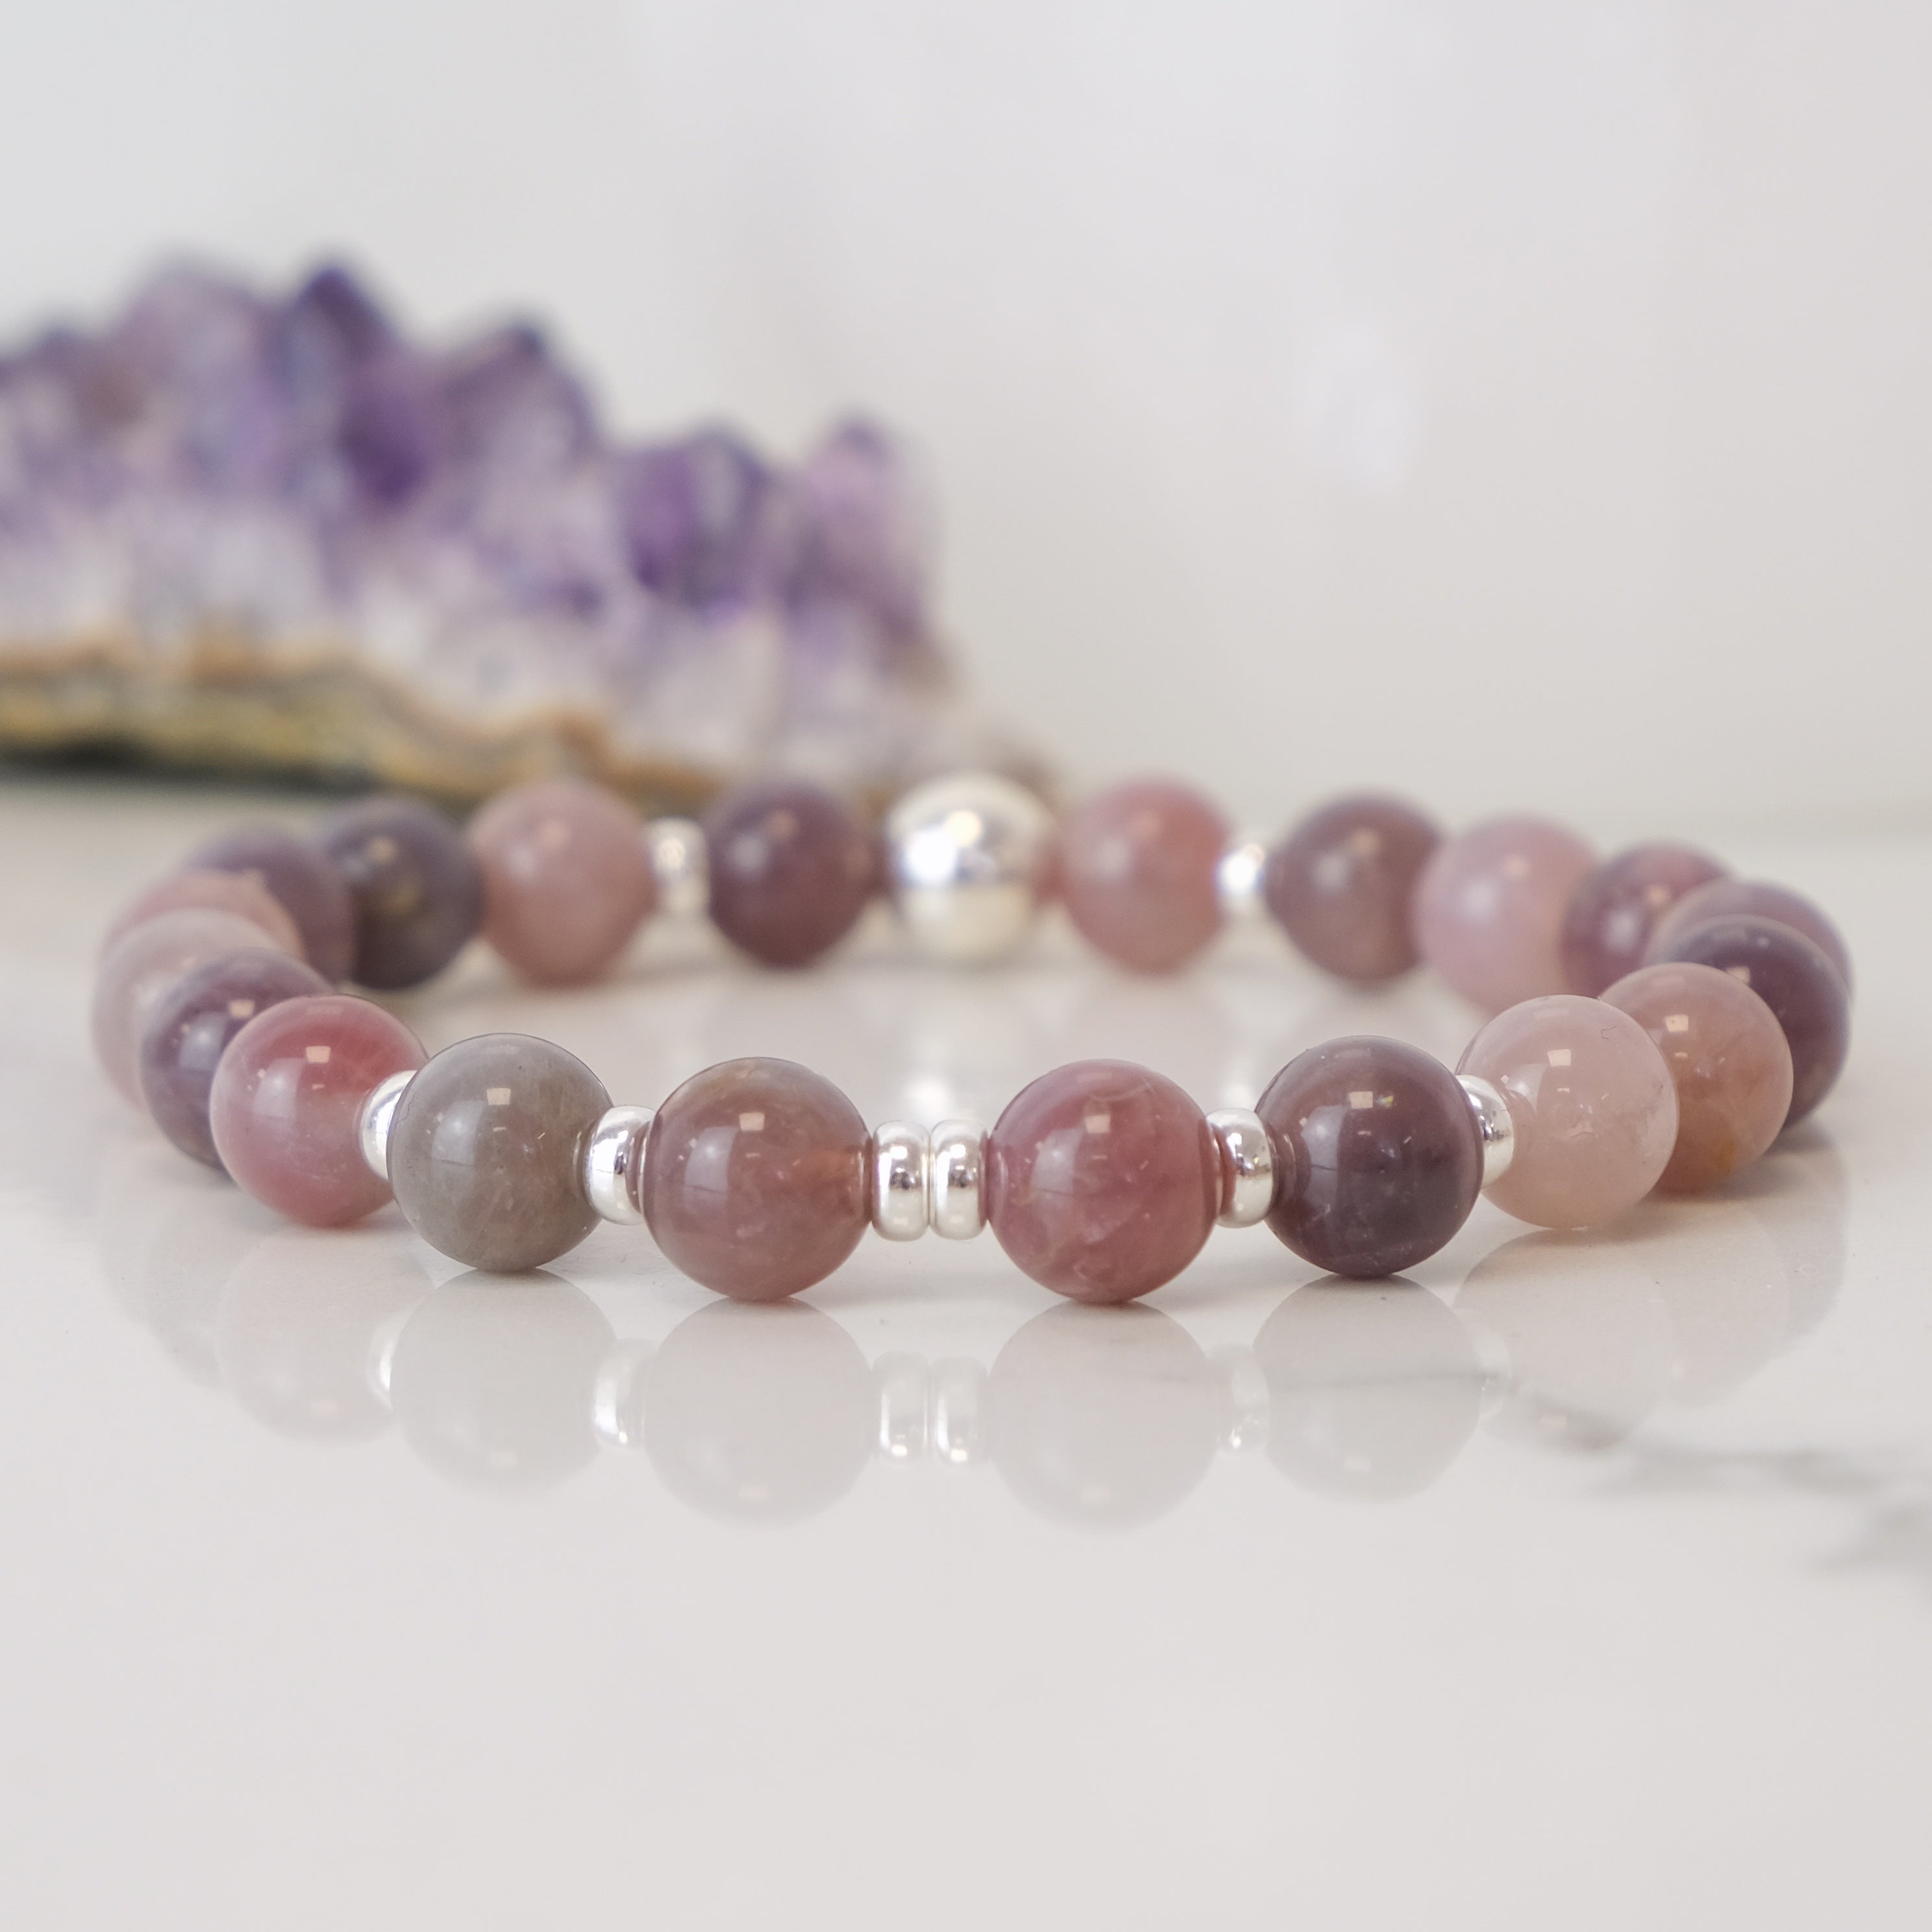 Lavender Rose Quartz gemstone bracelet with Silver accessories 